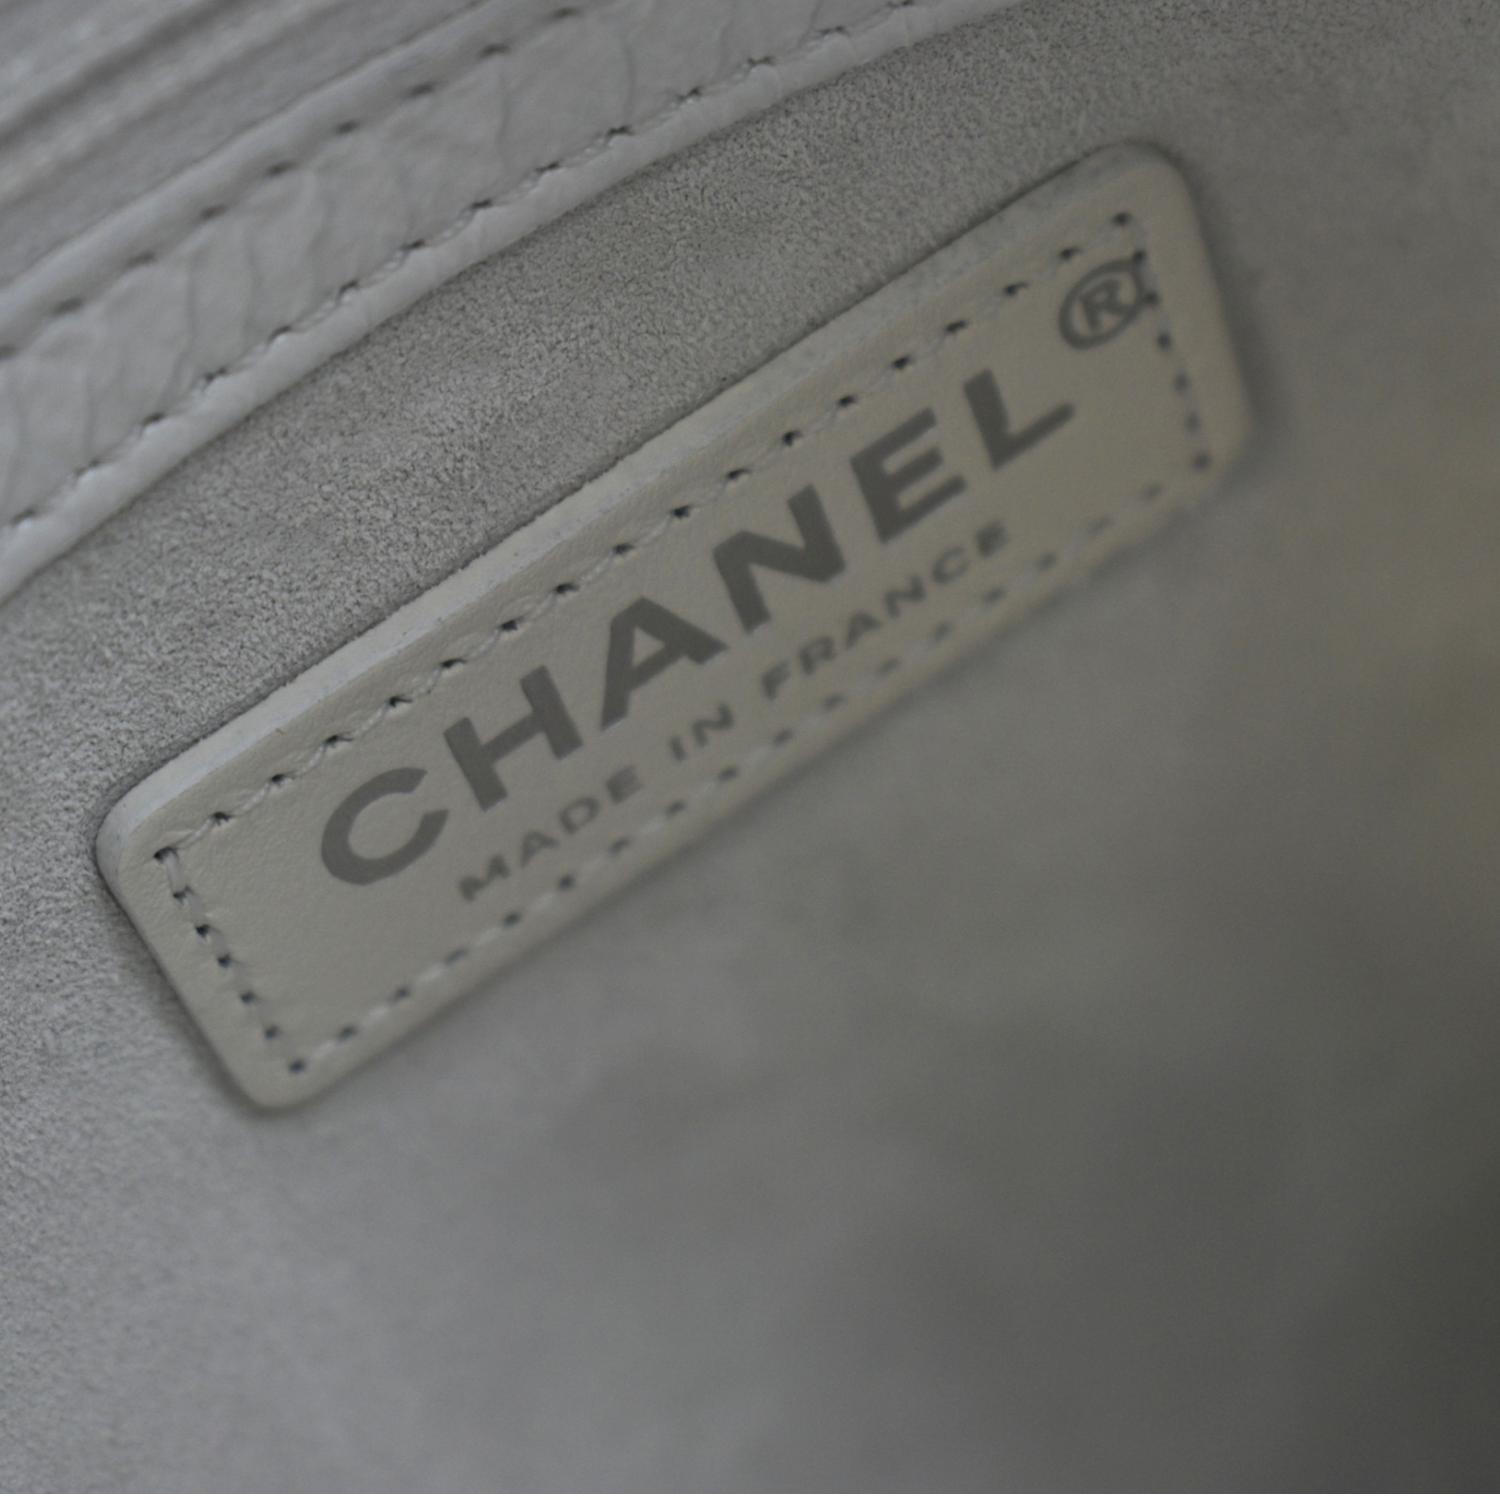 Chanel Droplet Hobo PVC Medium Clear